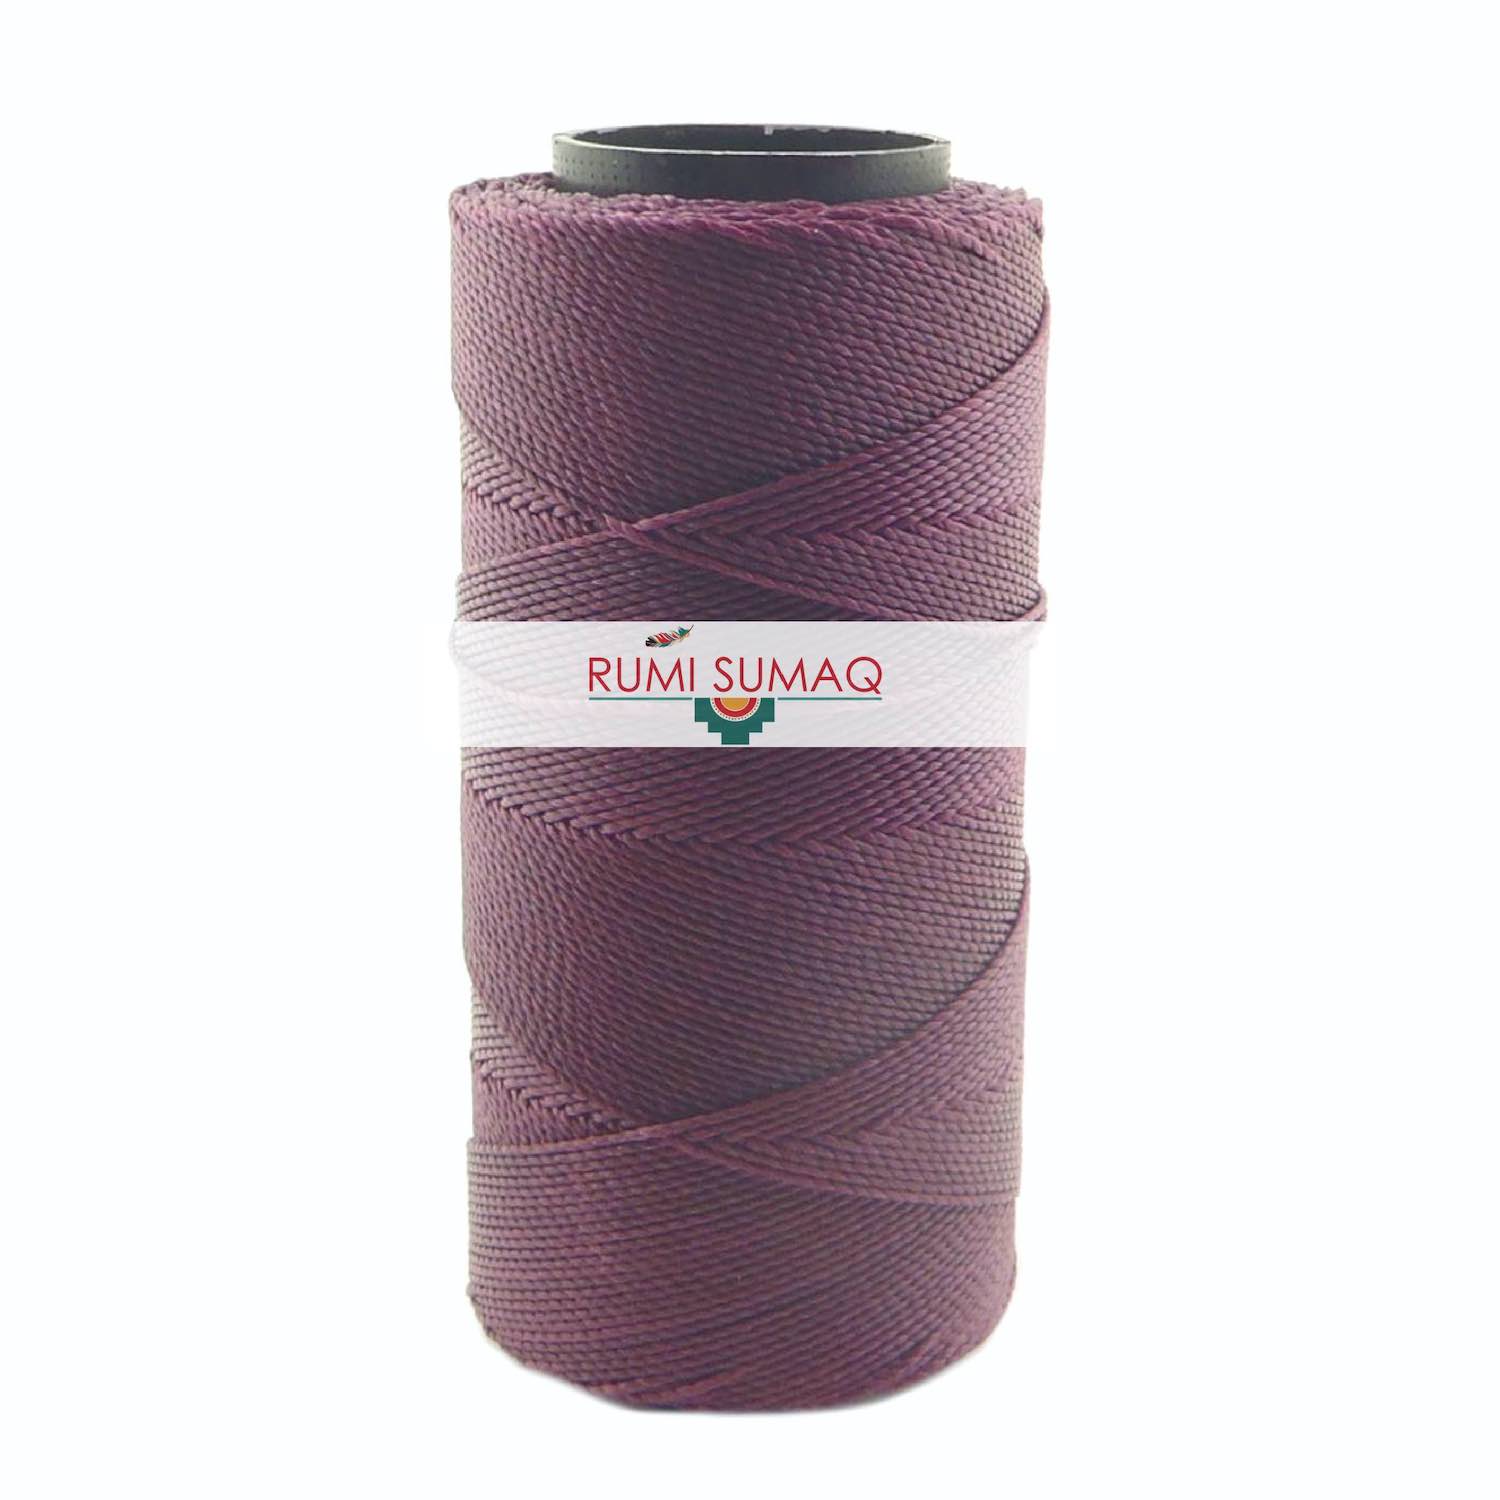 Settanyl 03-768 Plumtastic Purple Waxed purple cord 1mm Waxed Threads | Rumi Sumaq